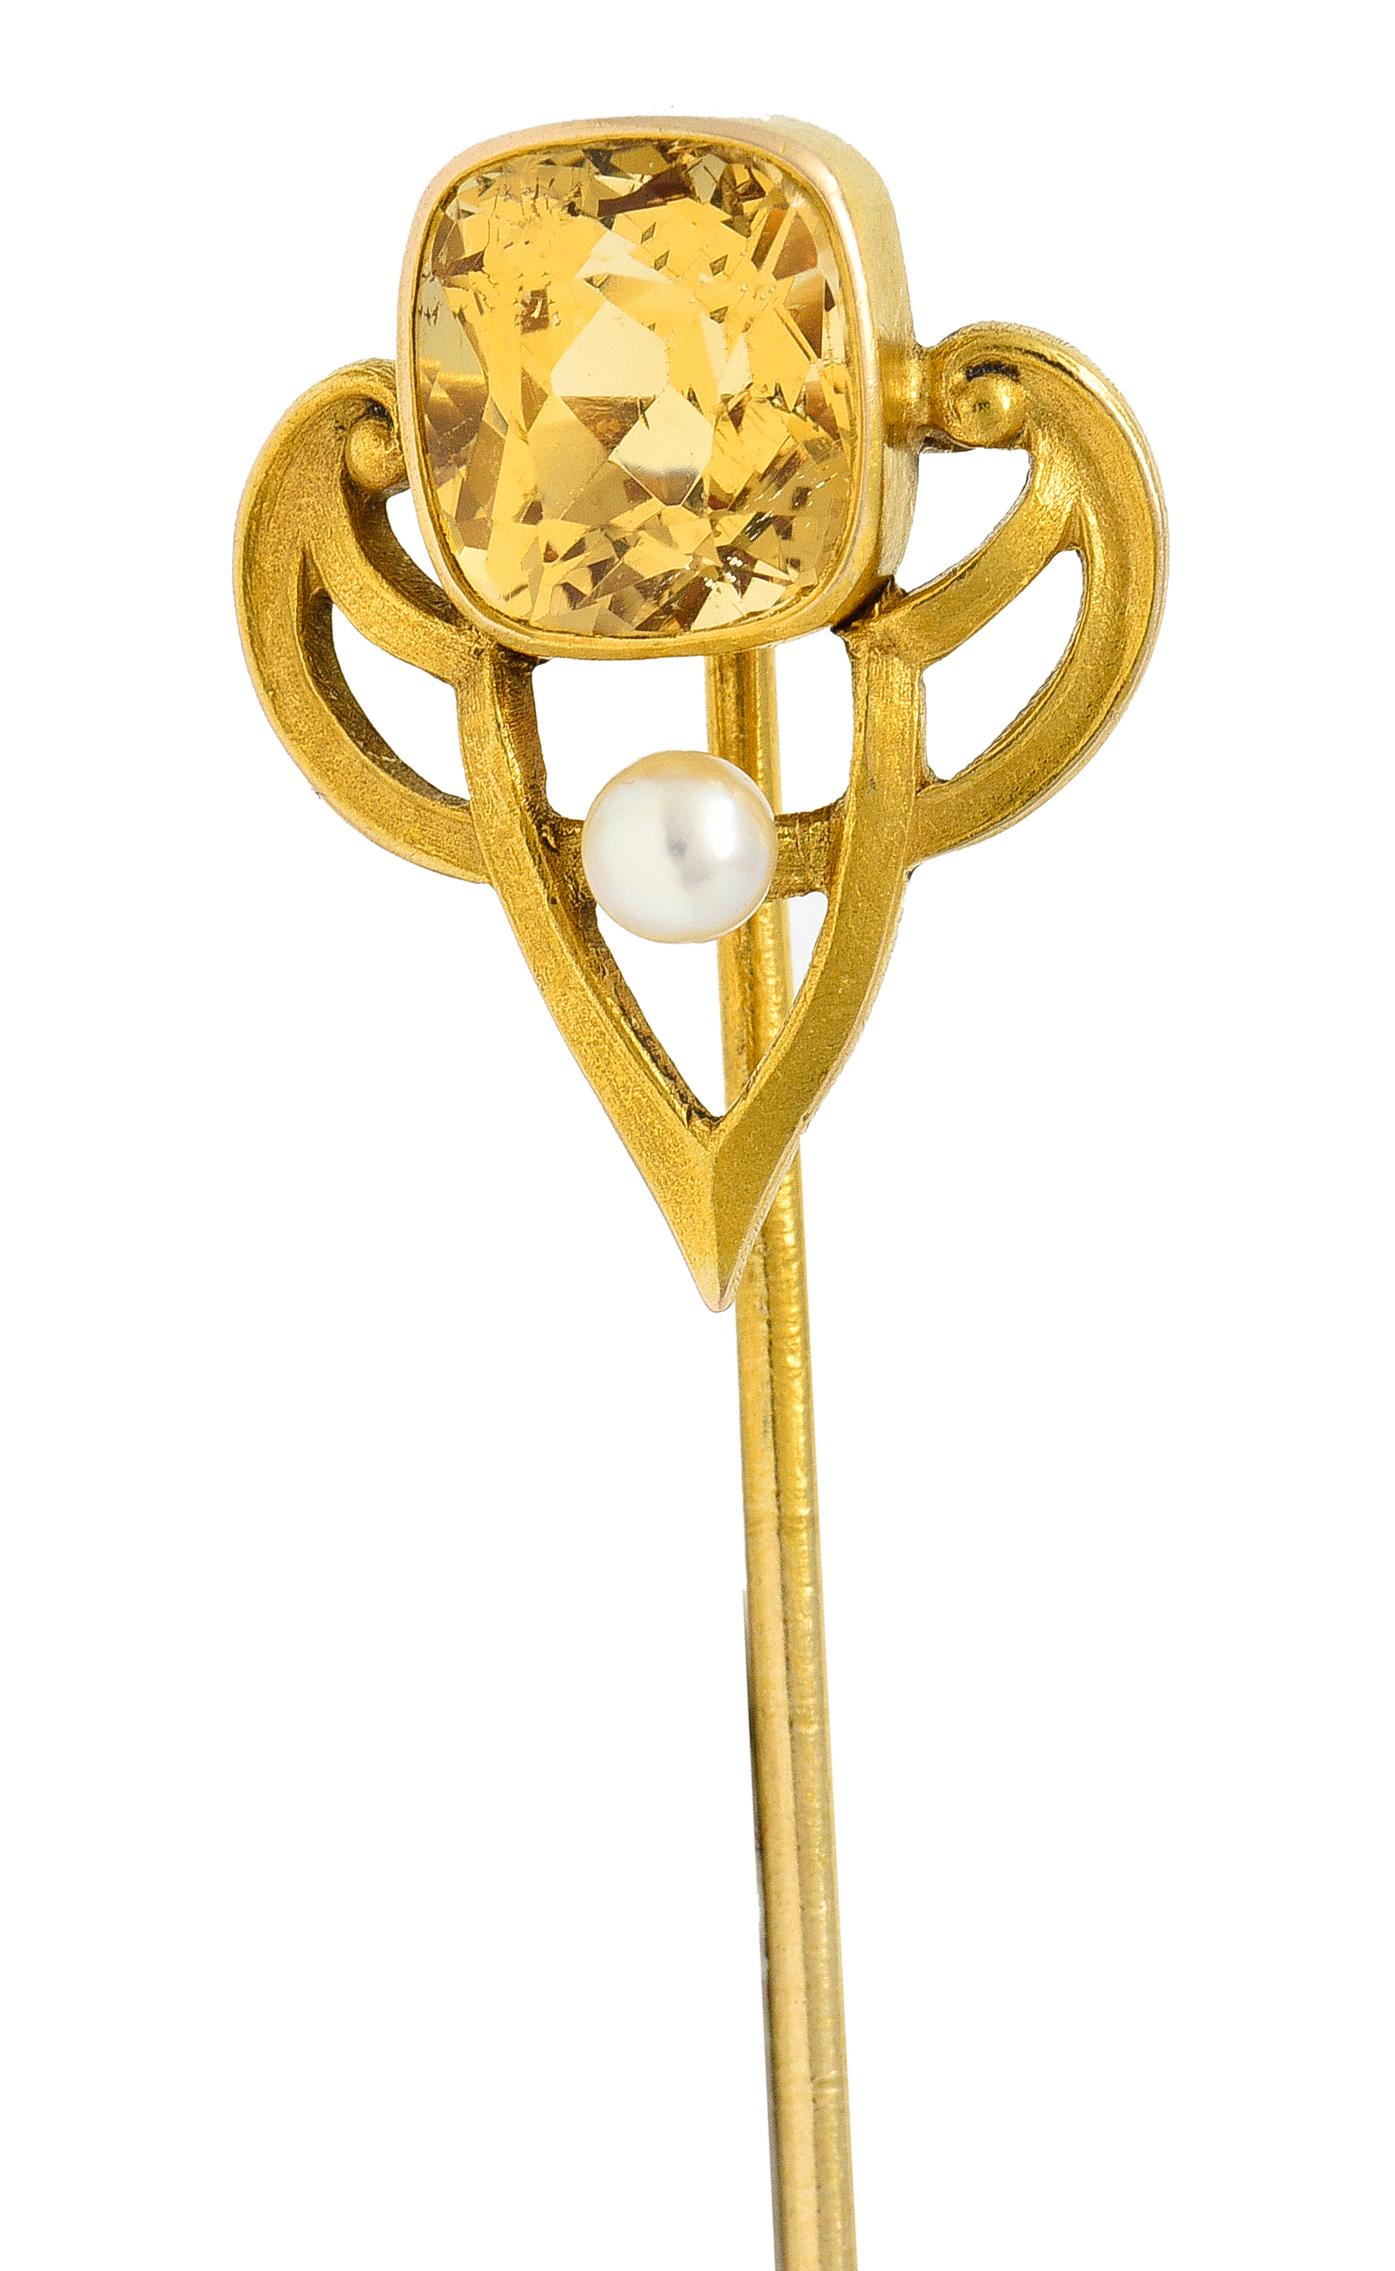 Riker Bros. Art Nouveau 1.73 Carats Heliodor Pearl 14 Karat Yellow Gold Stickpin For Sale 2